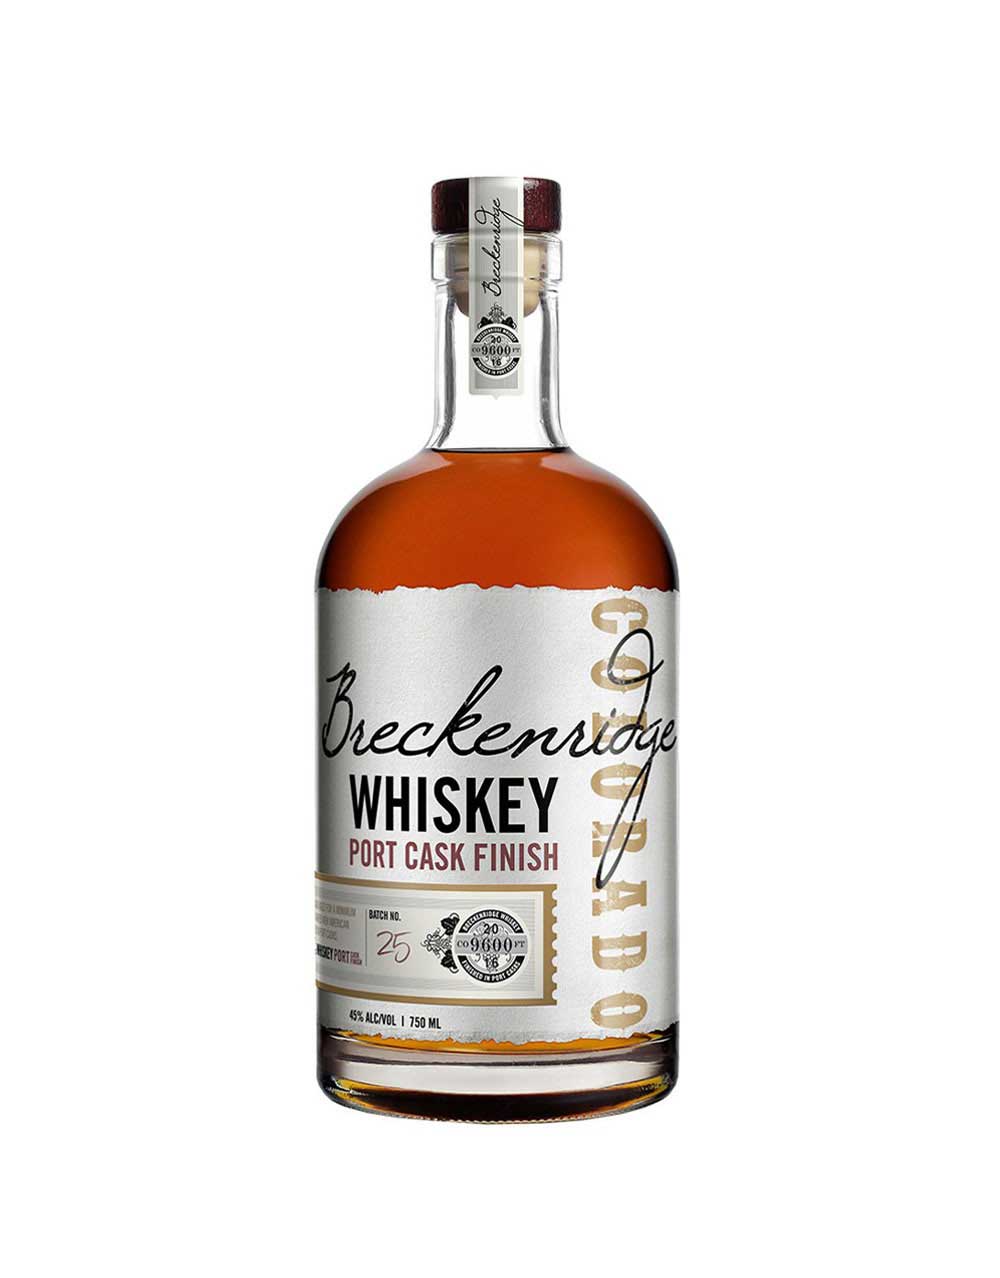 William Larue Weller 2018 Kentucky Straight Bourbon Whiskey